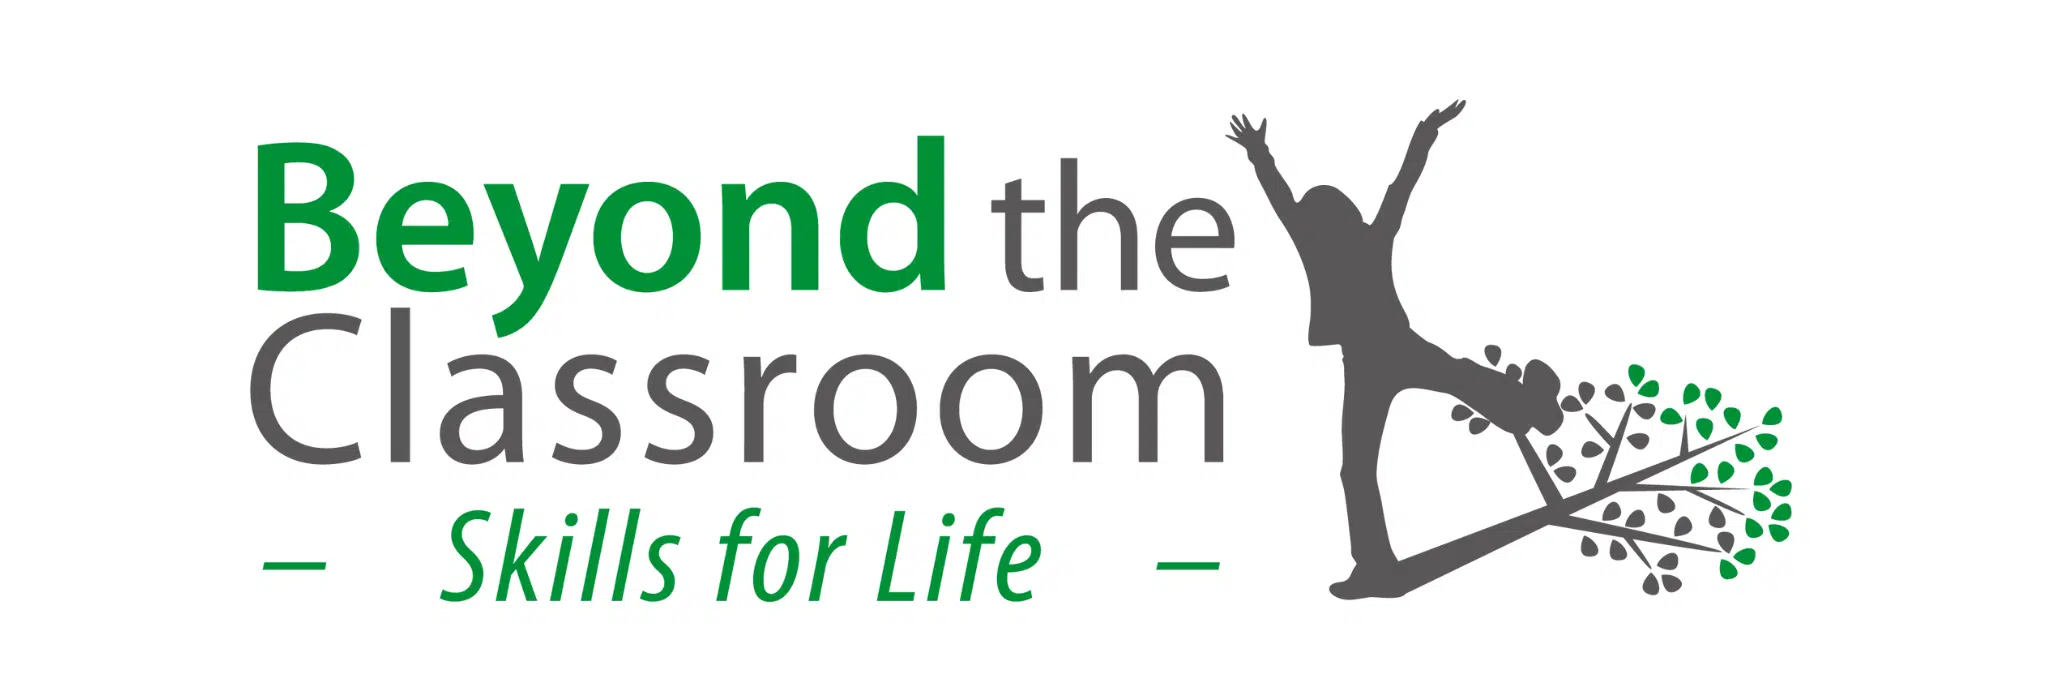 beyond-the-classroom-logo